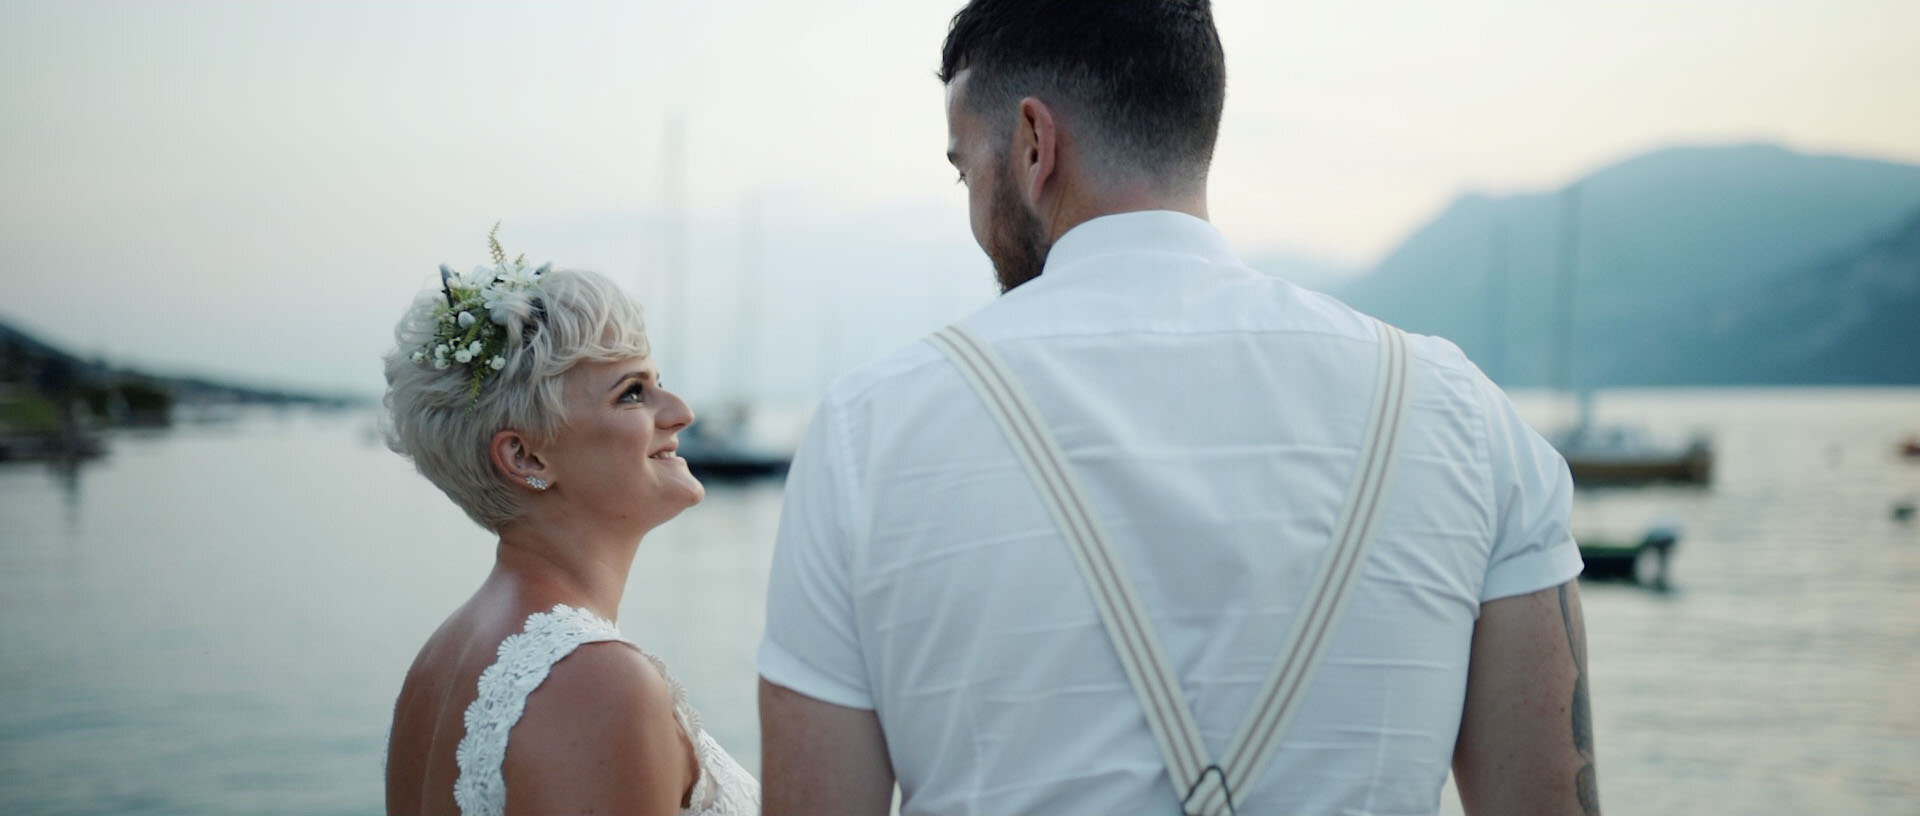 Emma & Tom Destination Wedding Film Video in Malcesine Italy 2.jpg